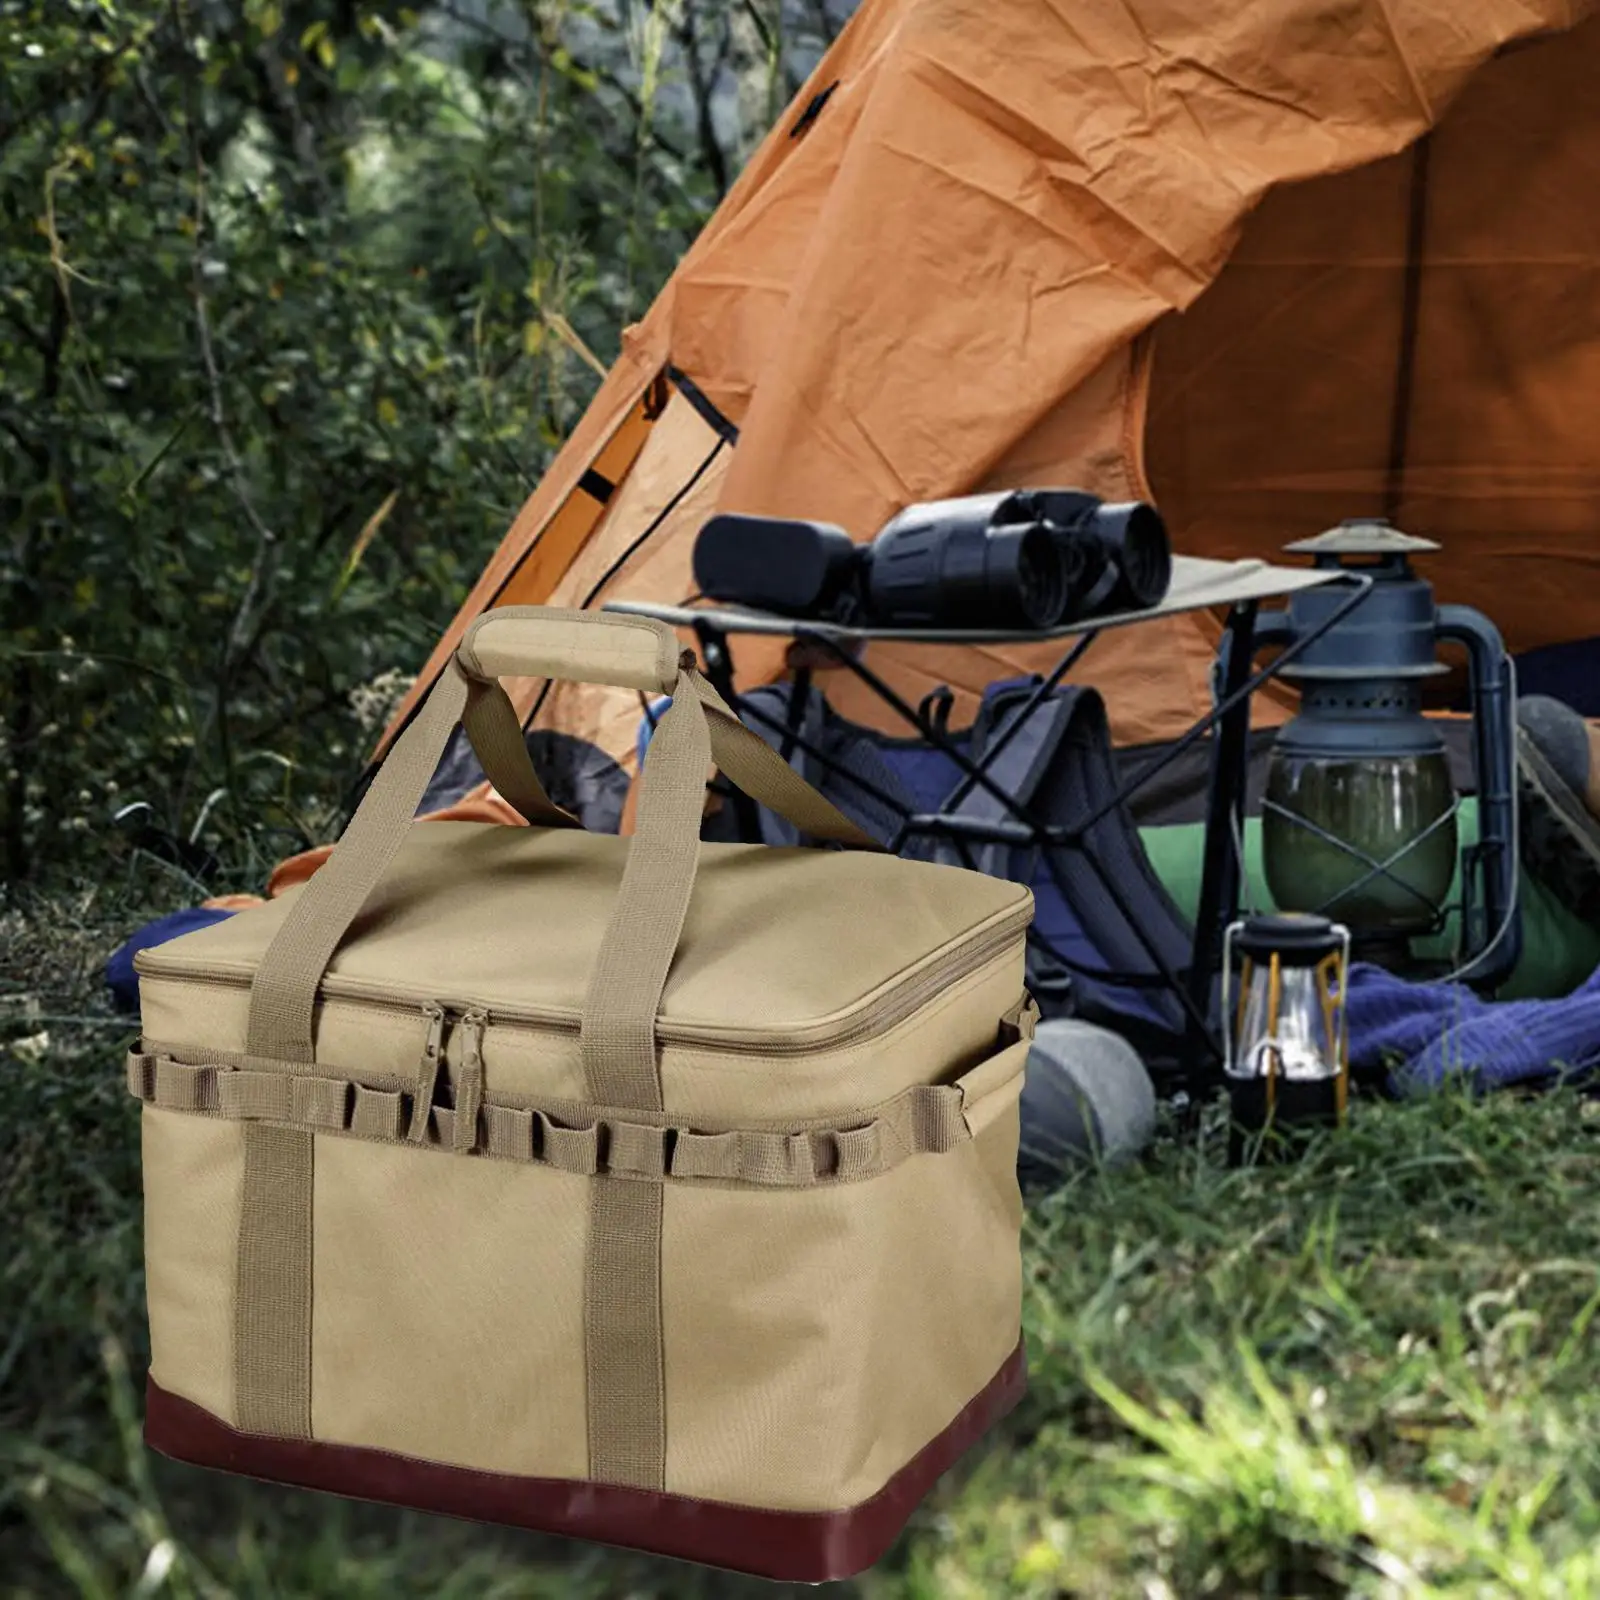 Outdoor Camping Storage Bag Travel Picnic Bag Portable Canvas Outdoor Camping Storage Tote Bag 